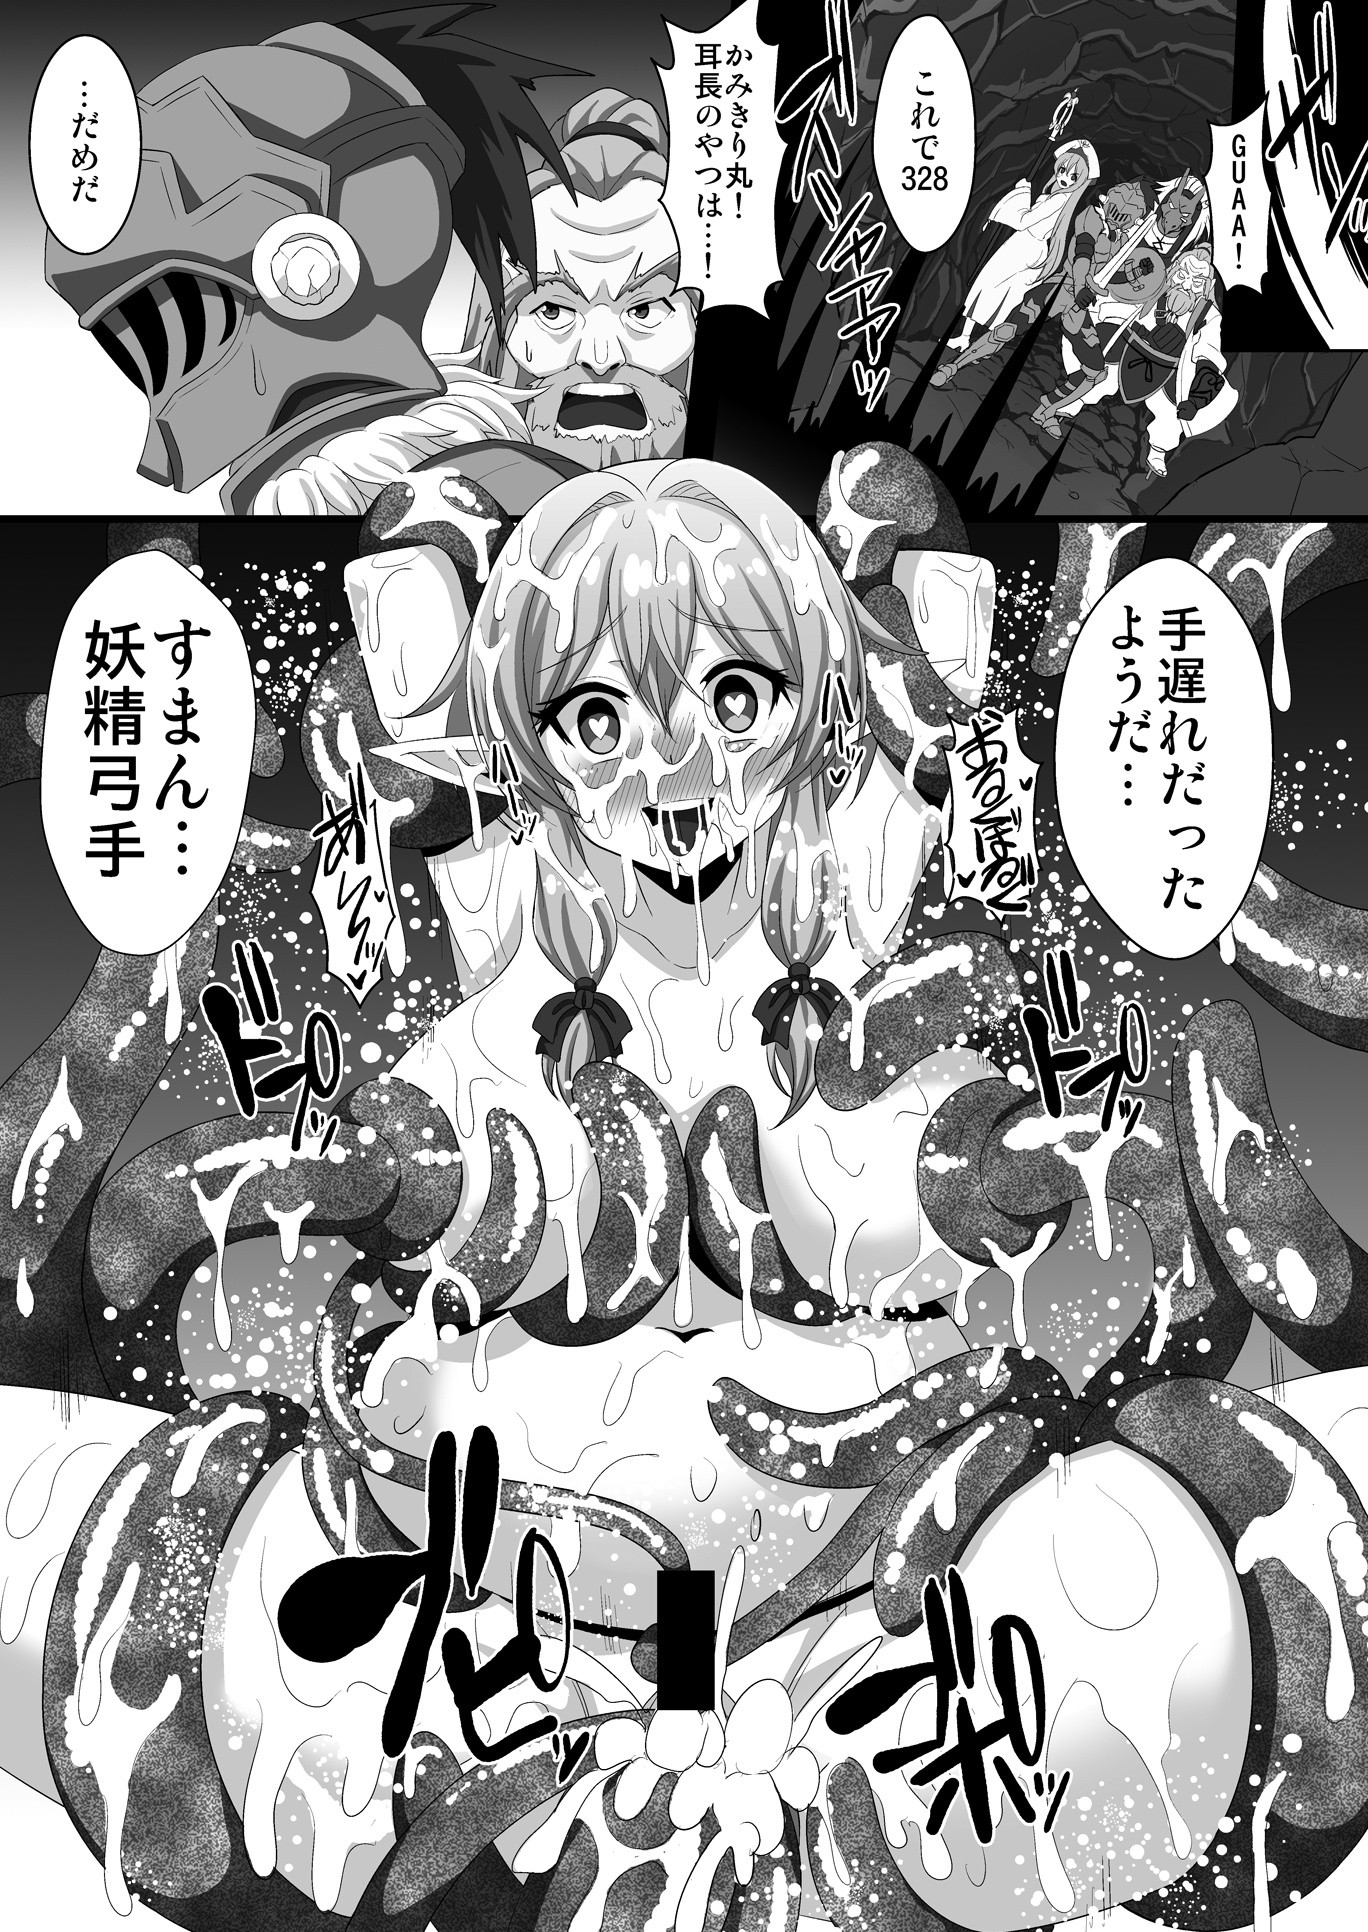 Goblin's Raper! hentai manga picture 19